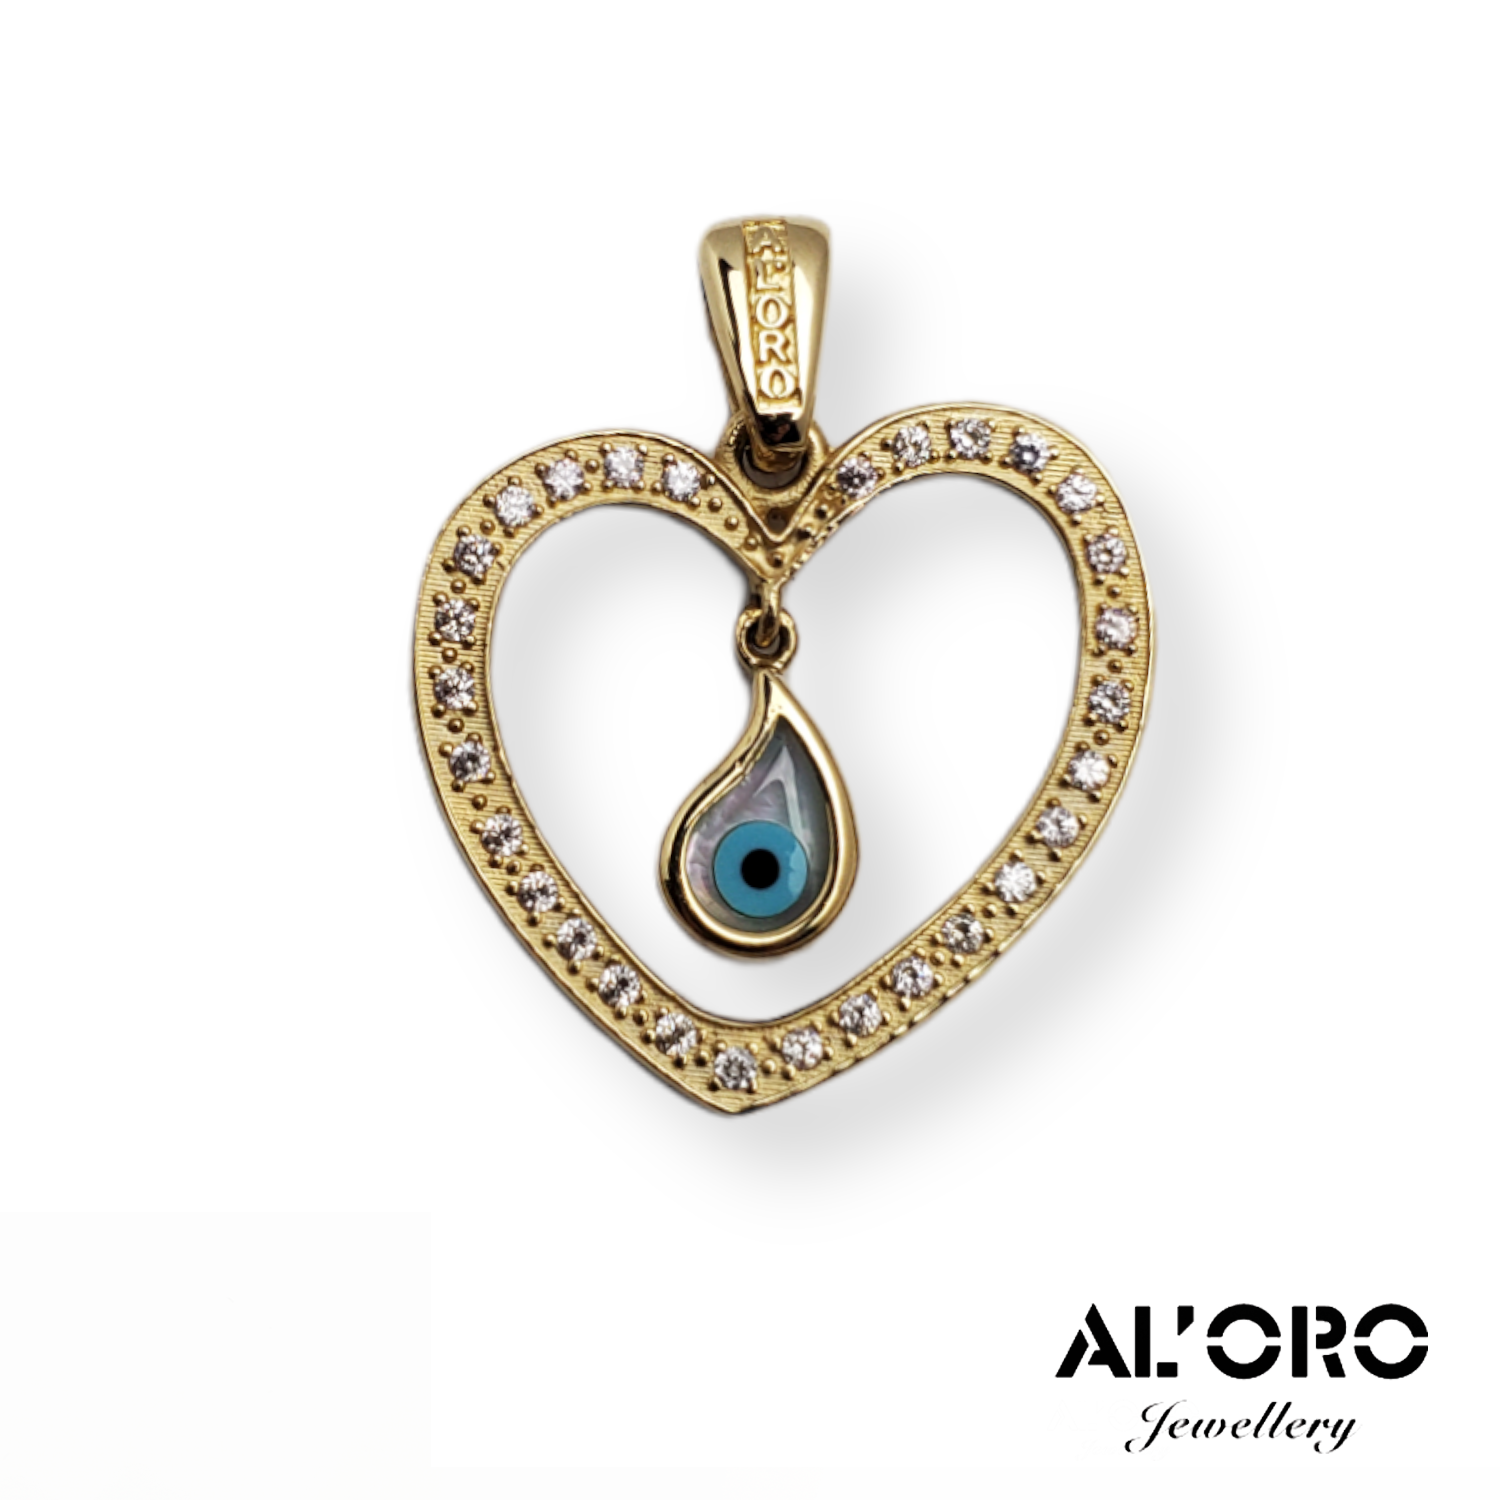 AL'ORO 14K Yellow Gold Heart Evil Eye Pendant Necklace